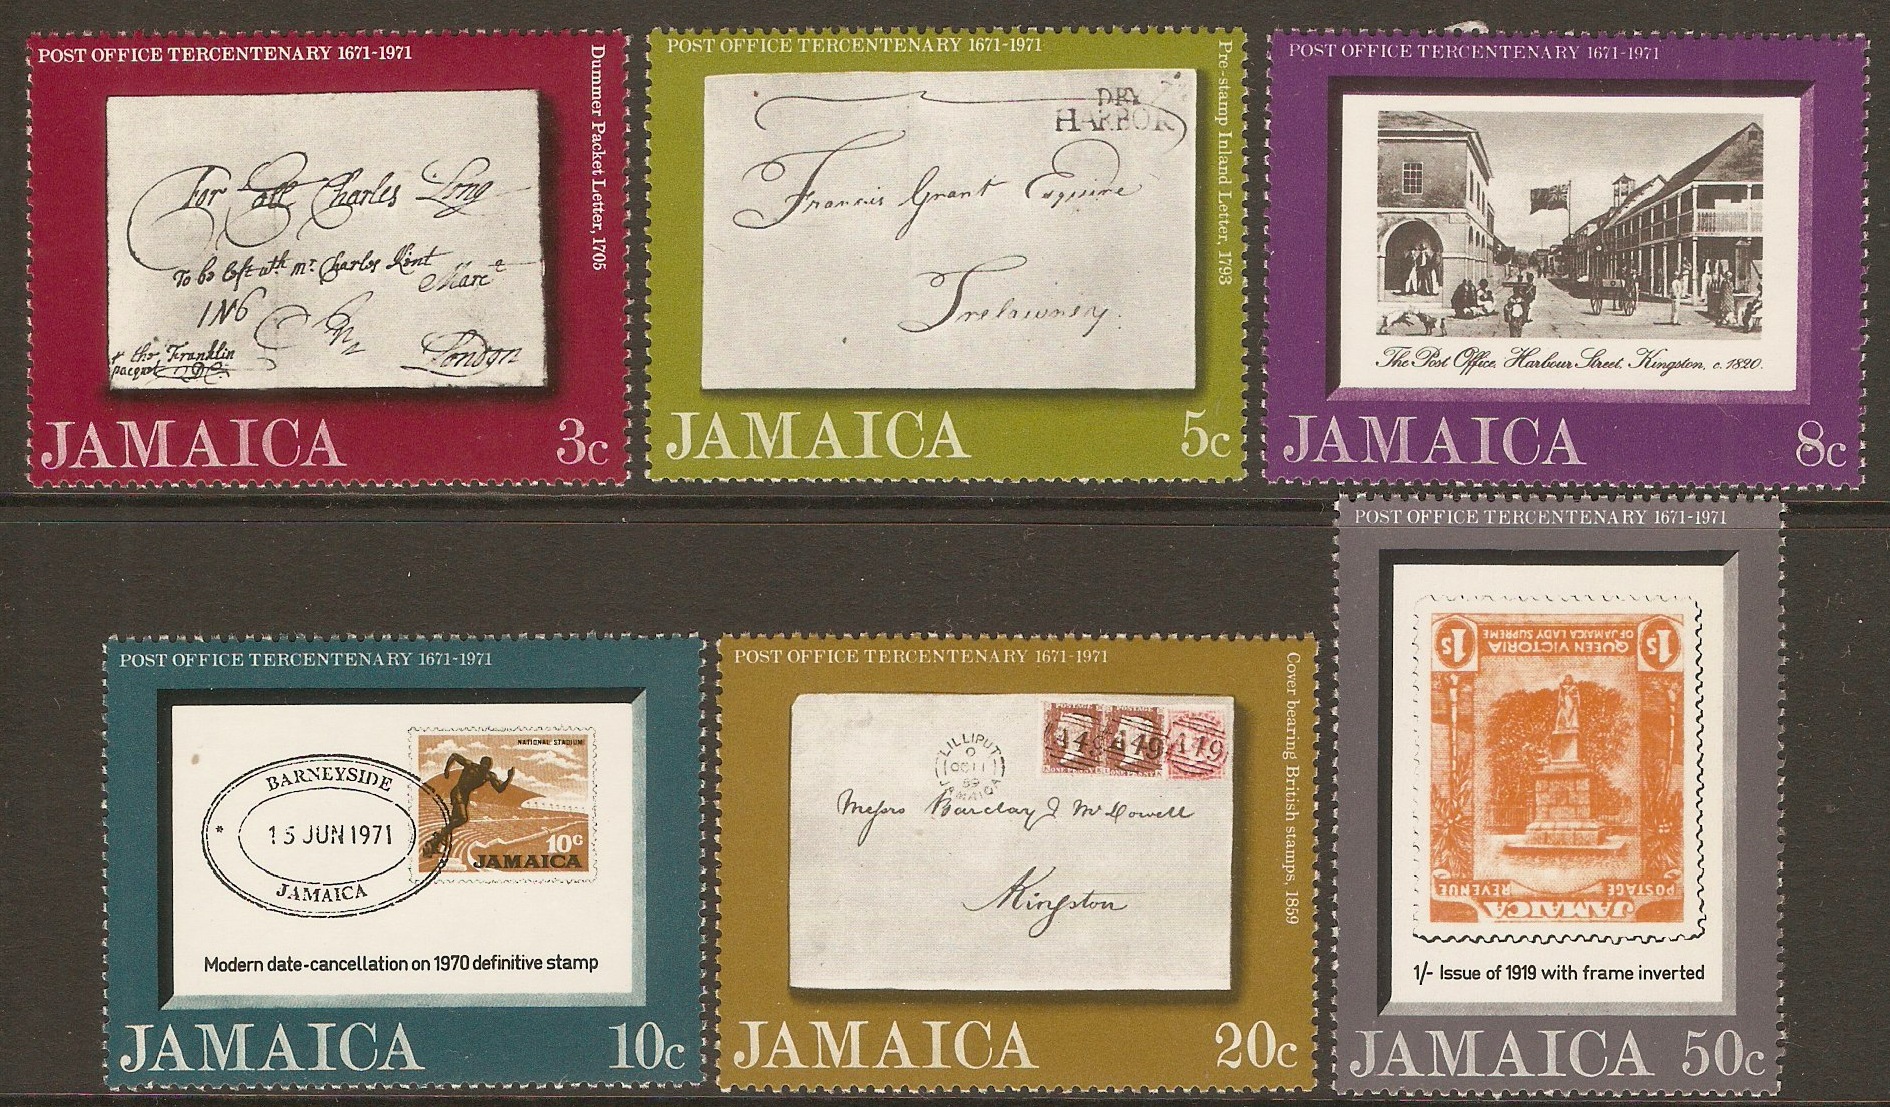 Jamaica 1971 Post Office Anniversary set. SG335-SG340.